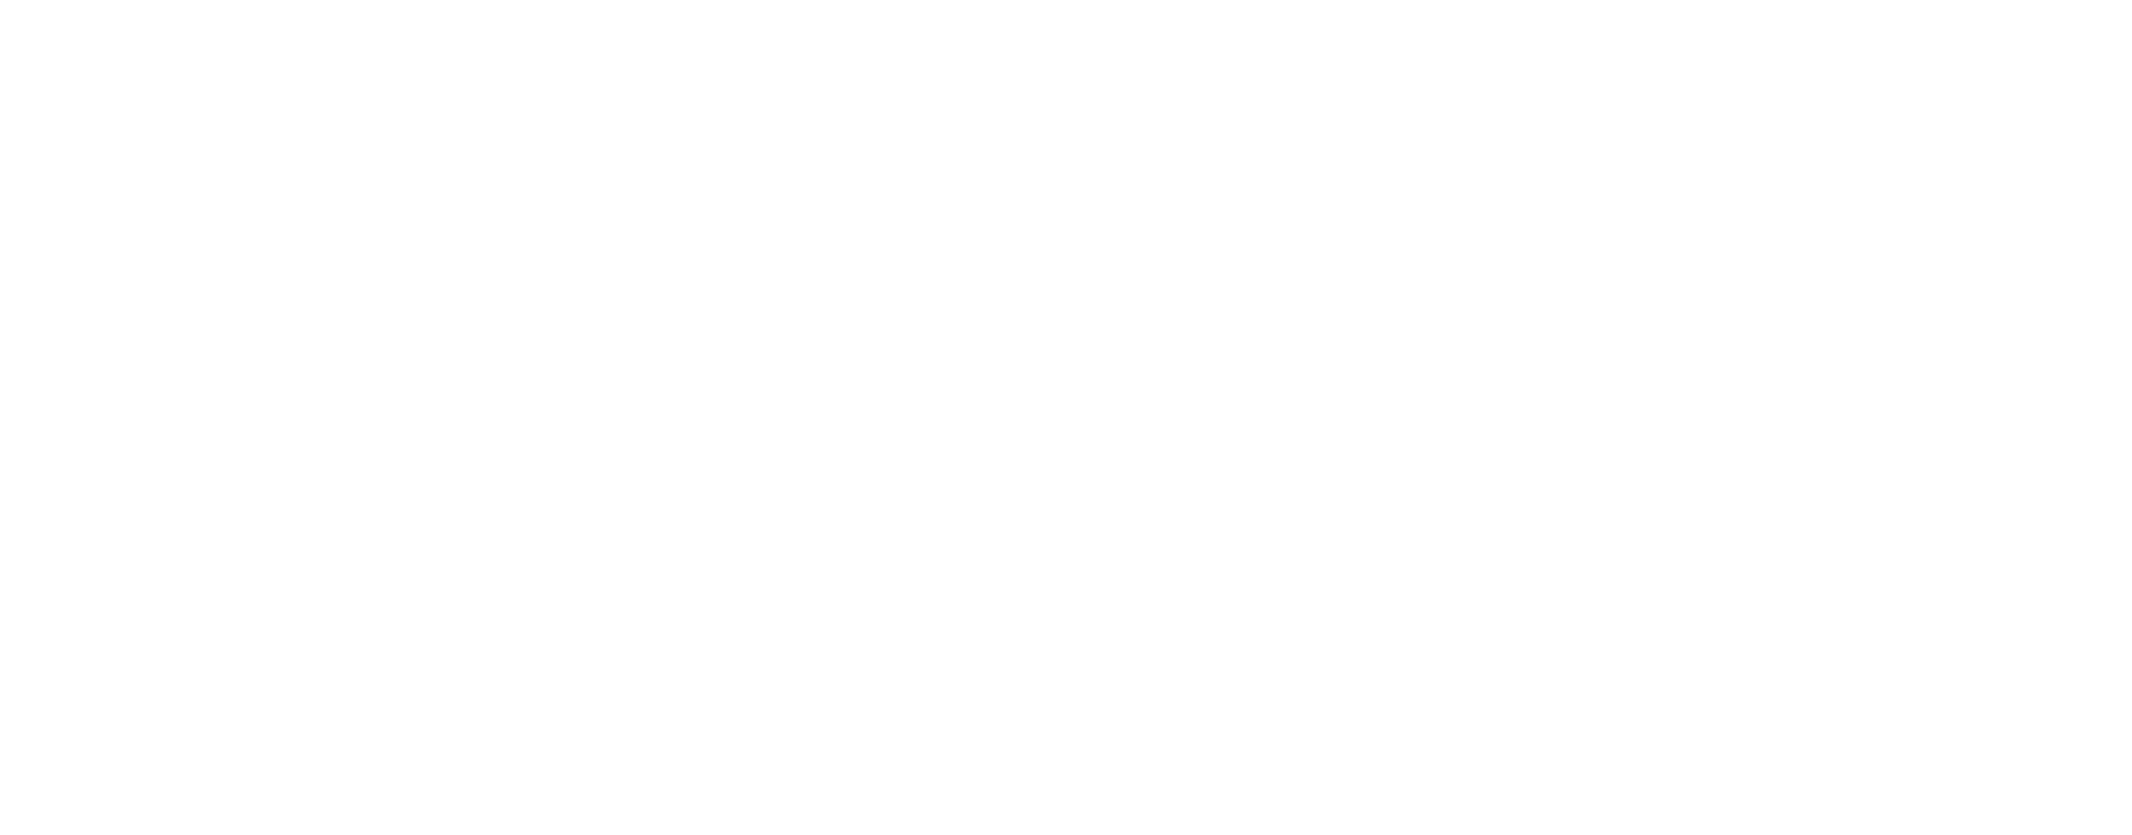 The Vlog Couple Logo